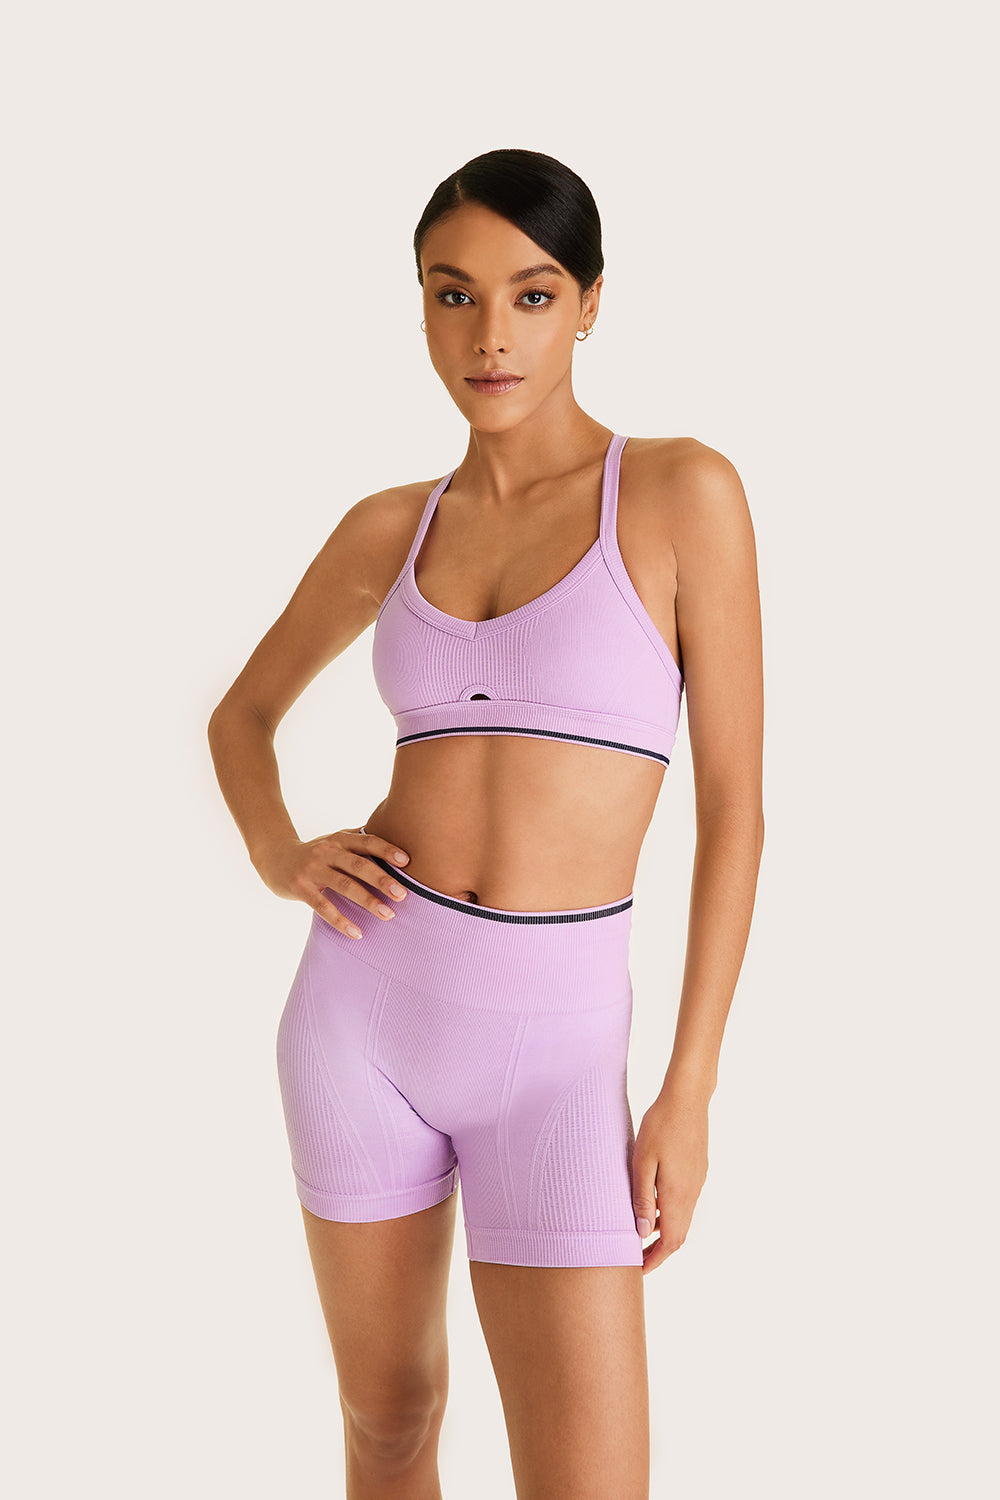 South Beach twist strap light support sports bra in violet